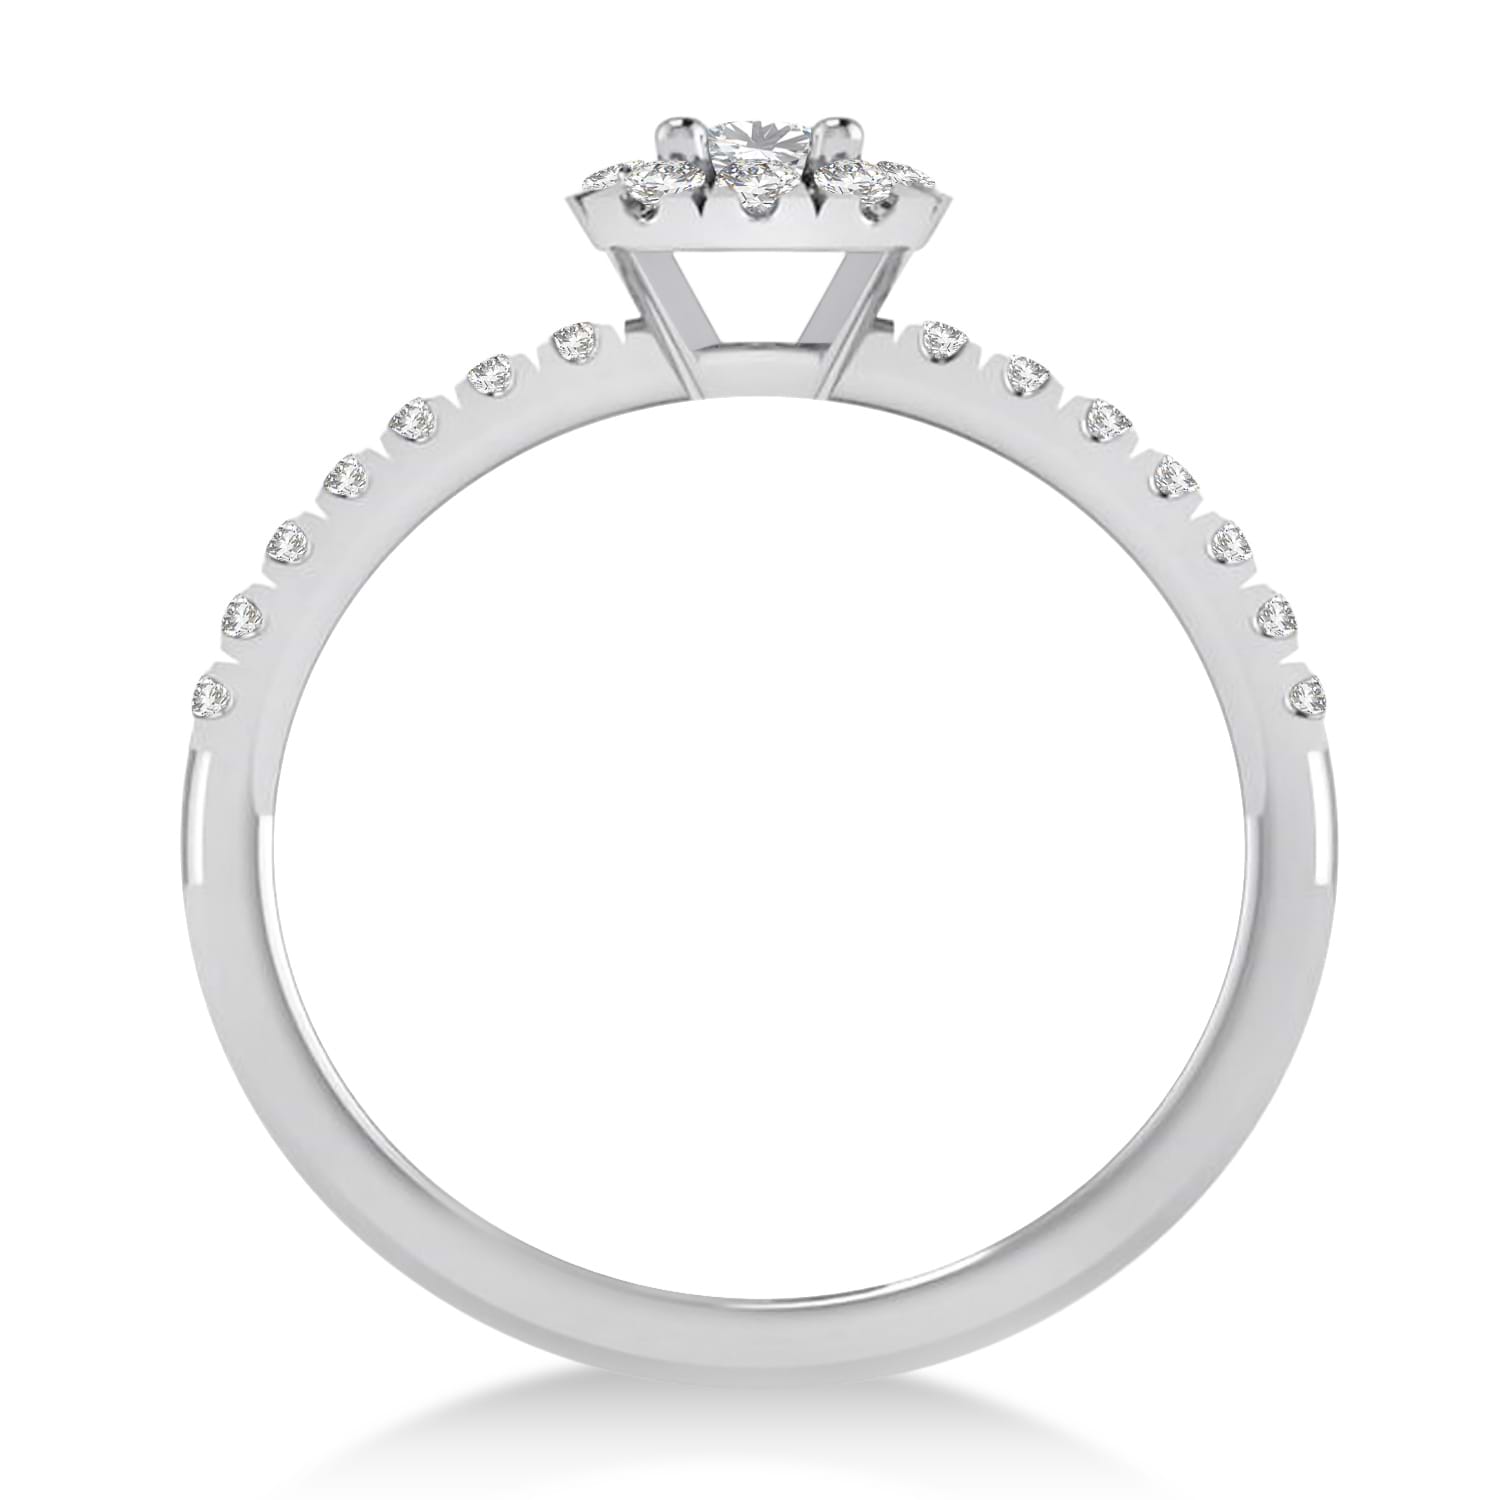 Emerald Moissanite & Diamond Halo Engagement Ring 14k White Gold (0.68ct)